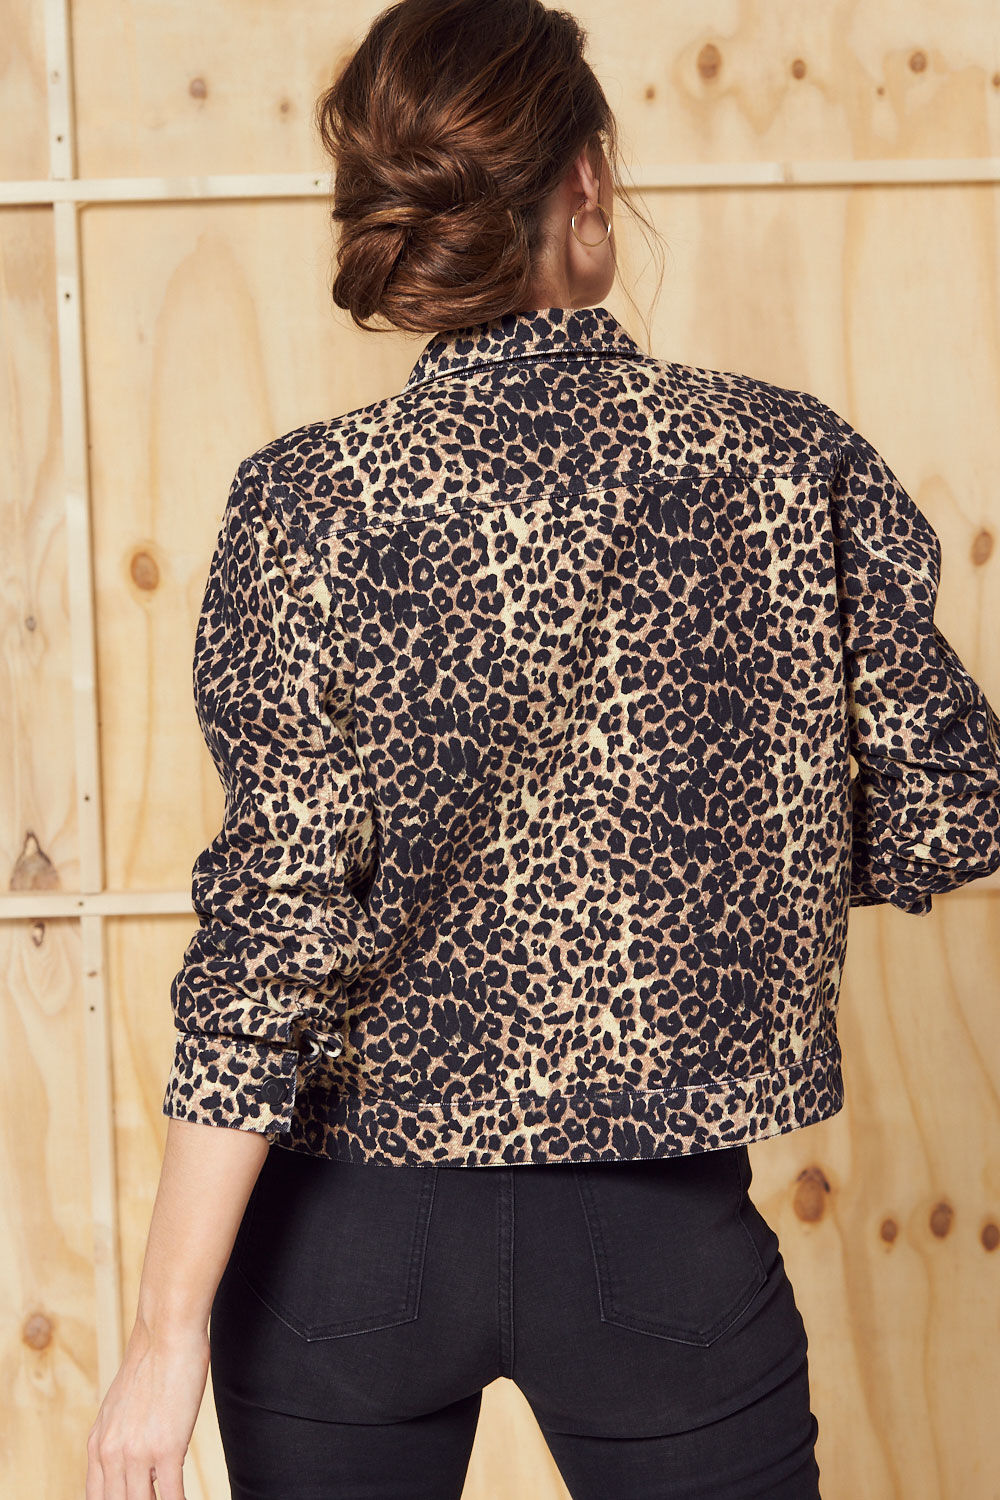 Zeagle leopard print denim jacket - Anya